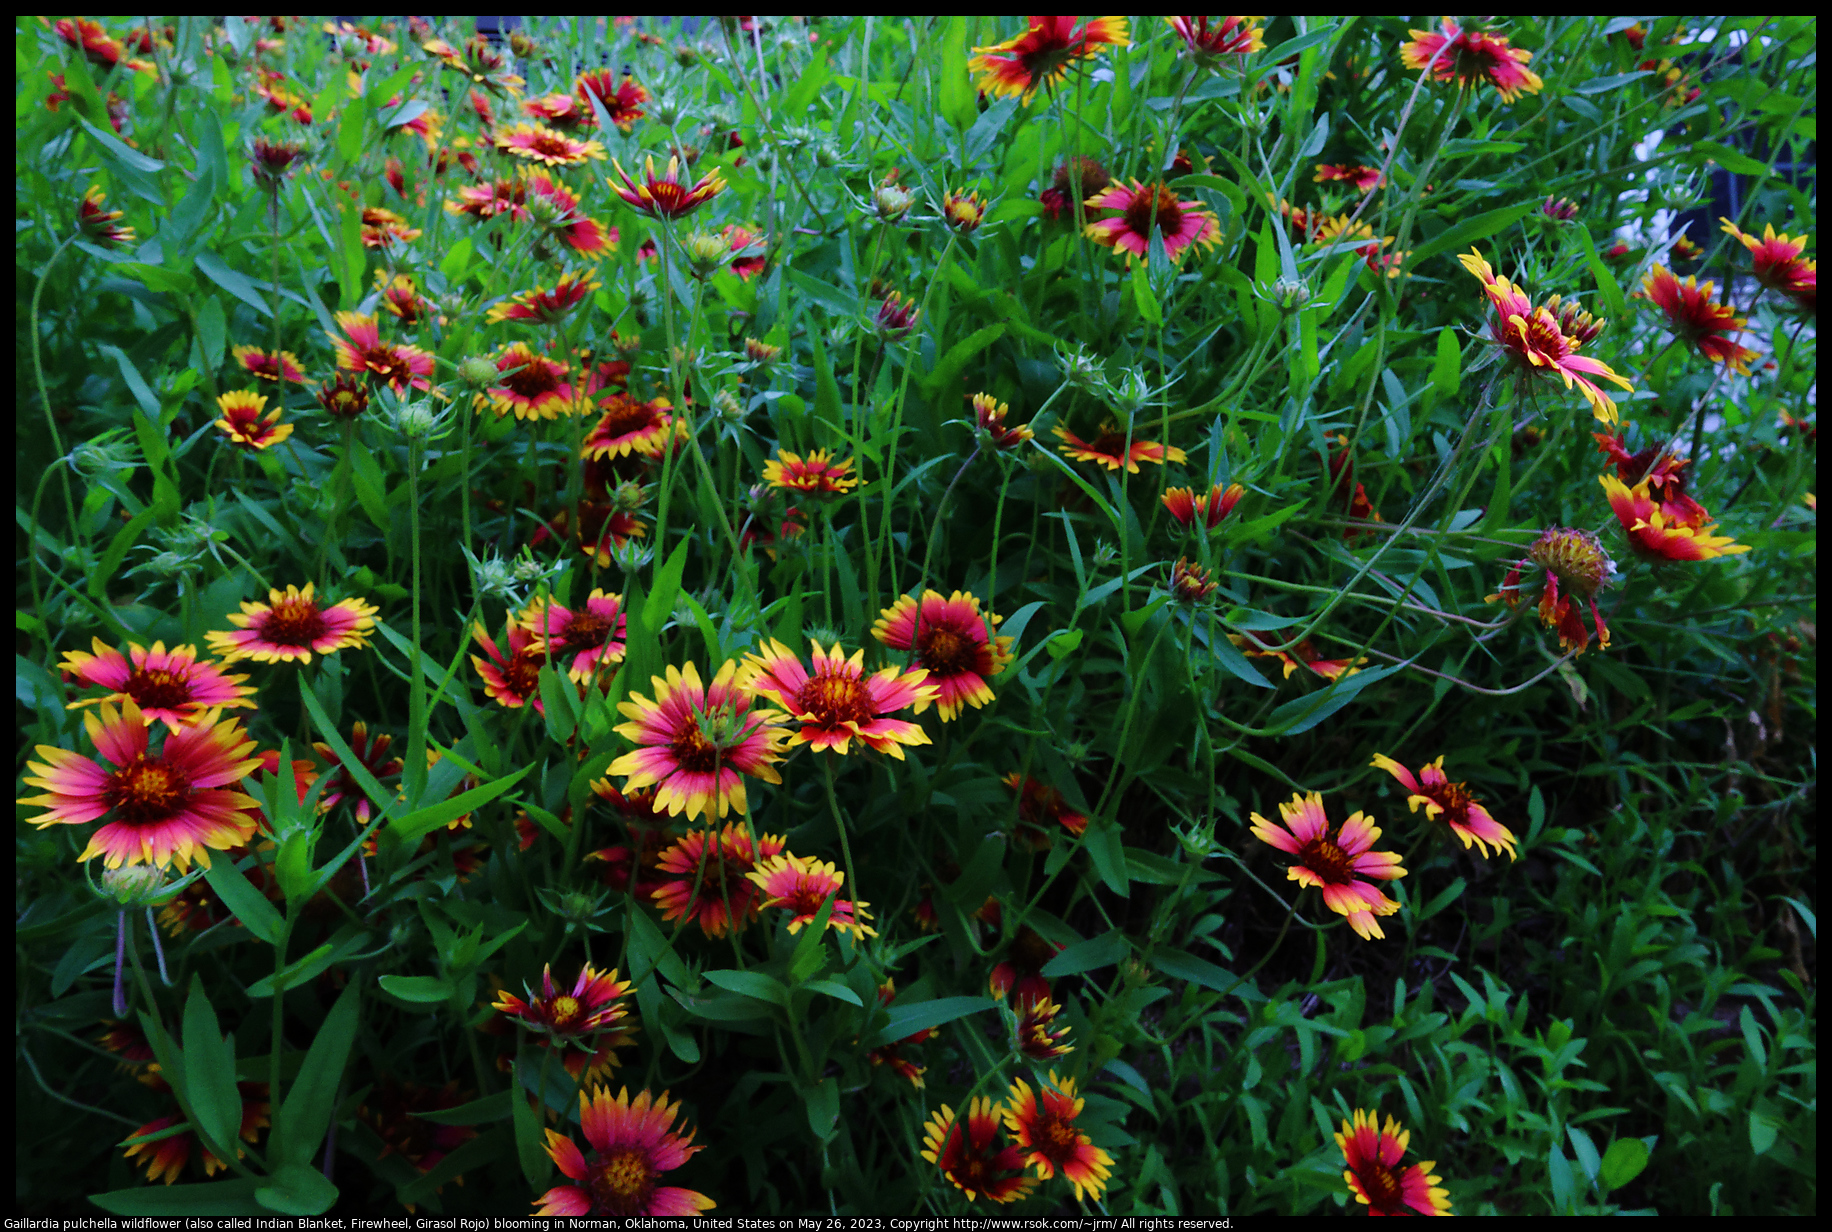 Gaillardia pulchella wildflower (also called Indian Blanket, Firewheel, Girasol Rojo) blooming in Norman, Oklahoma, United States on May 26, 2023